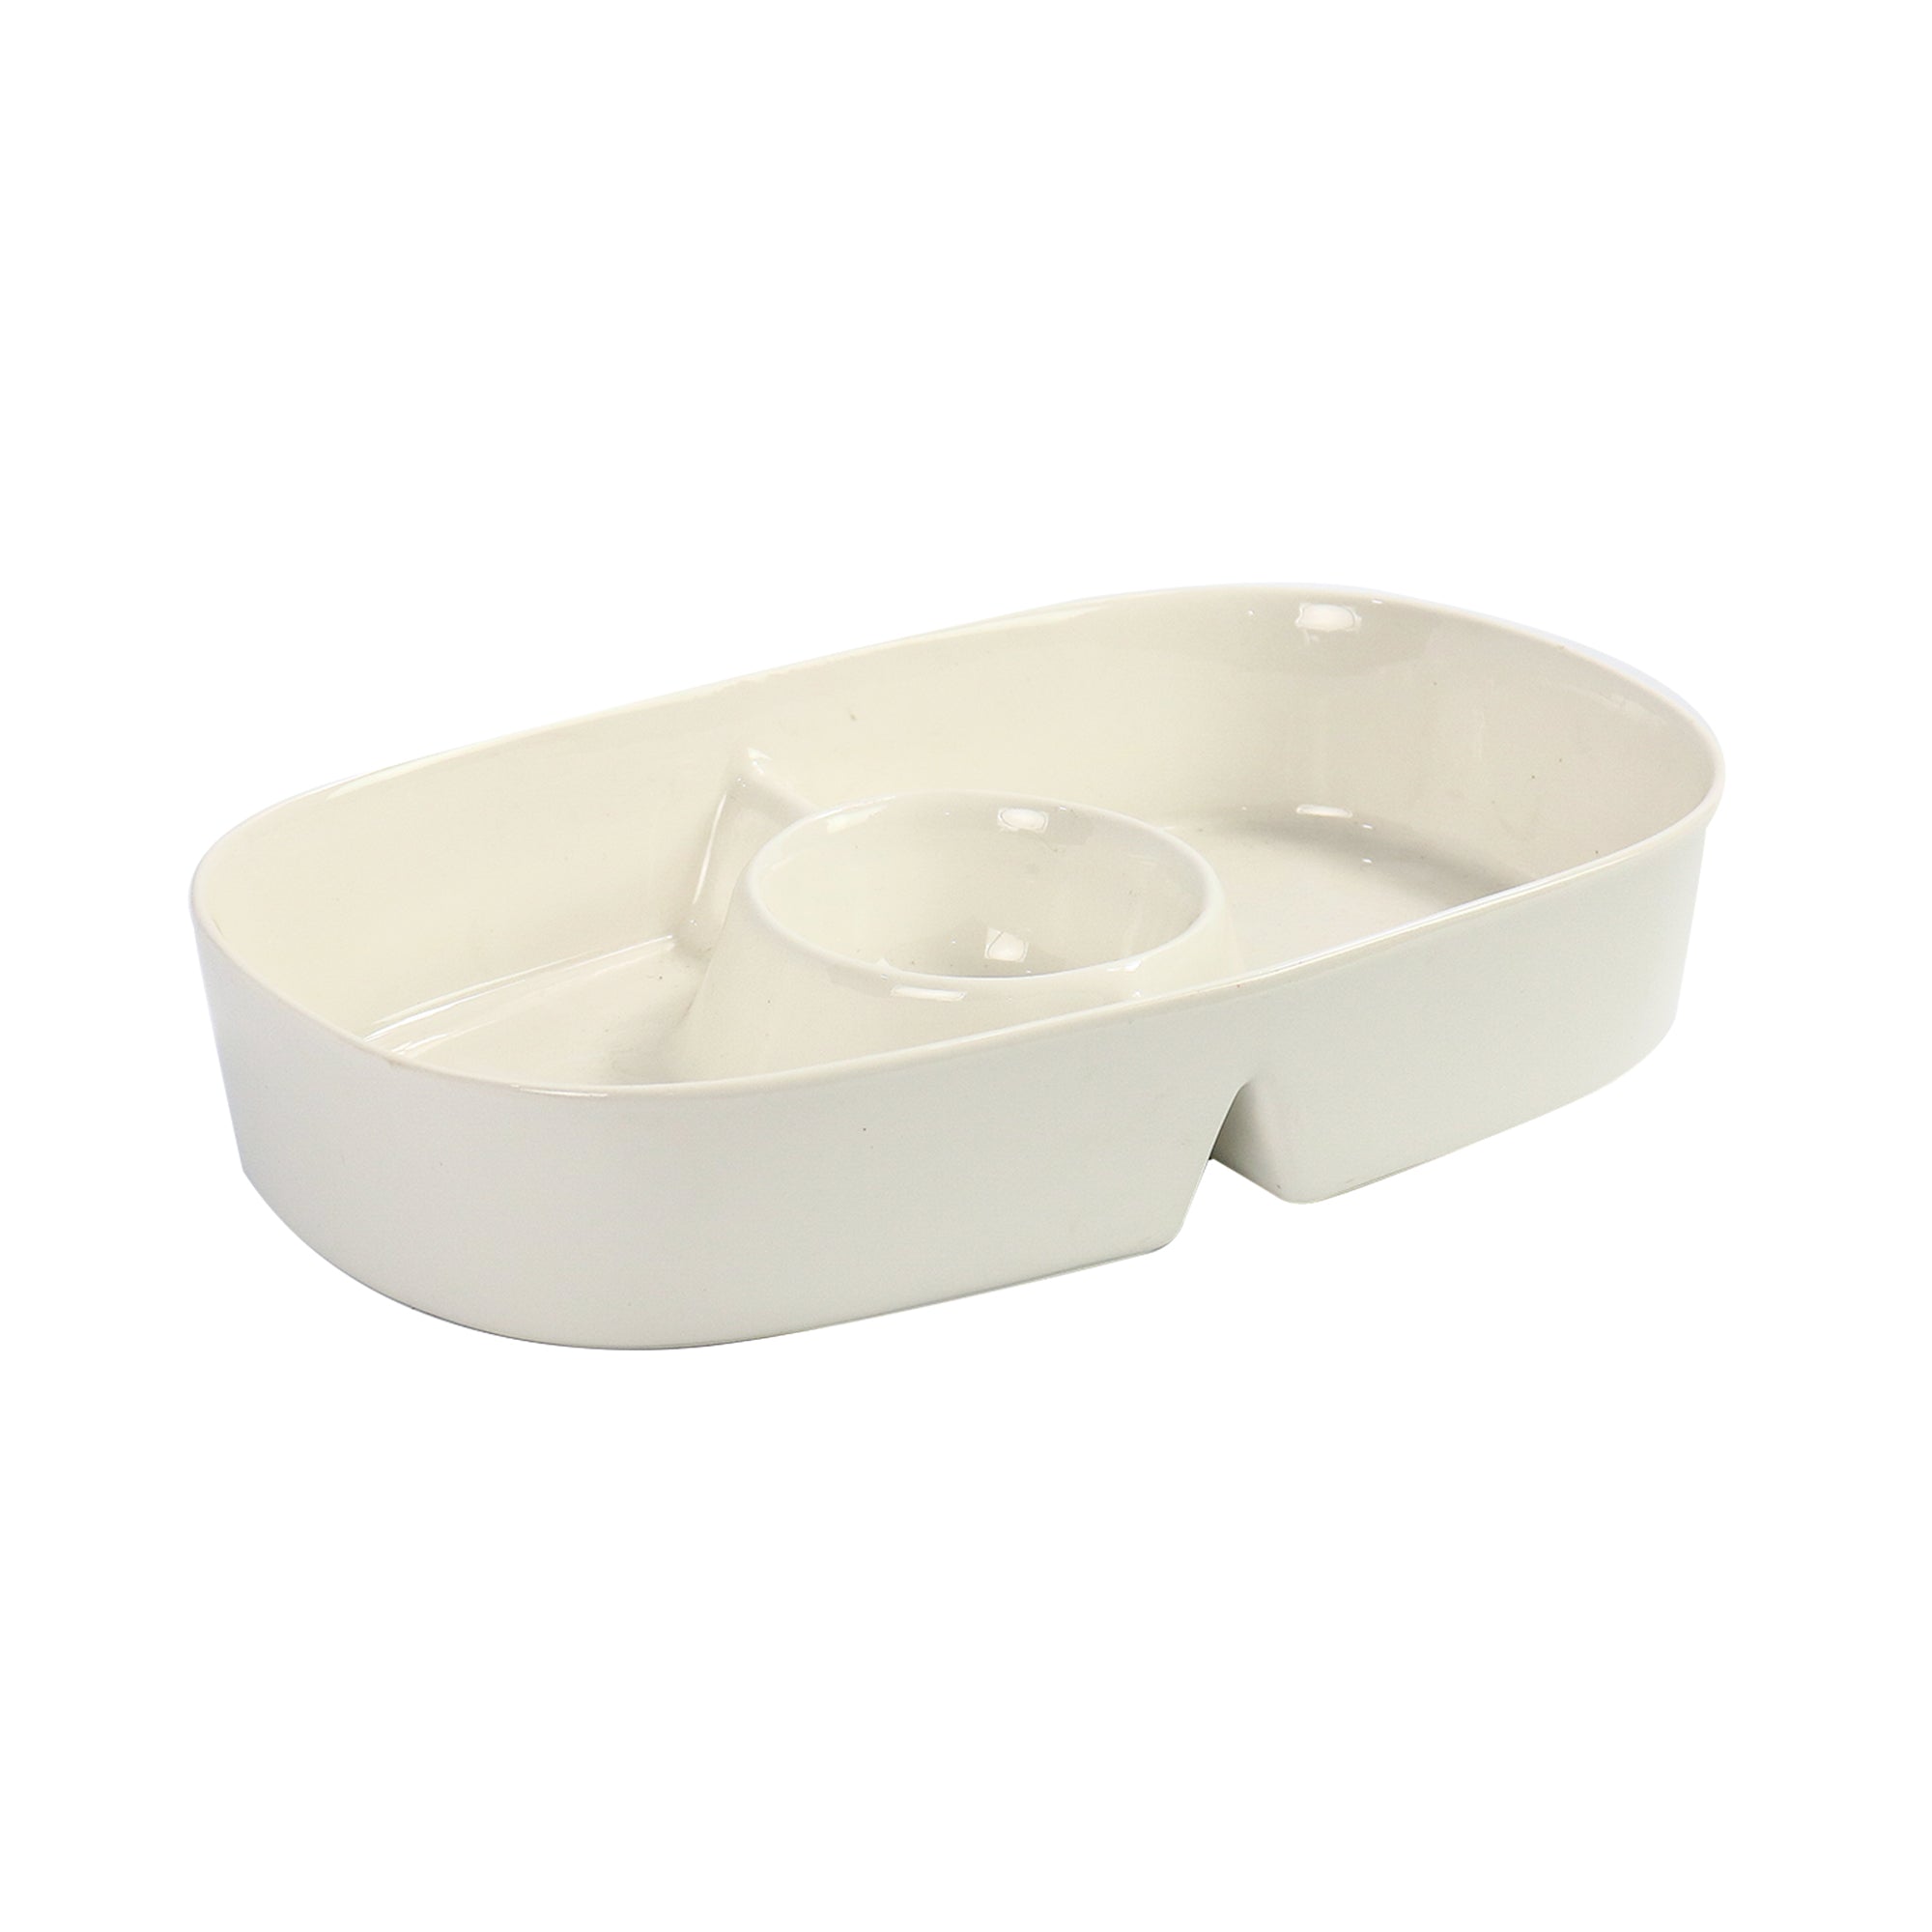 Ceramic Dish With Divider 34x20x6cm